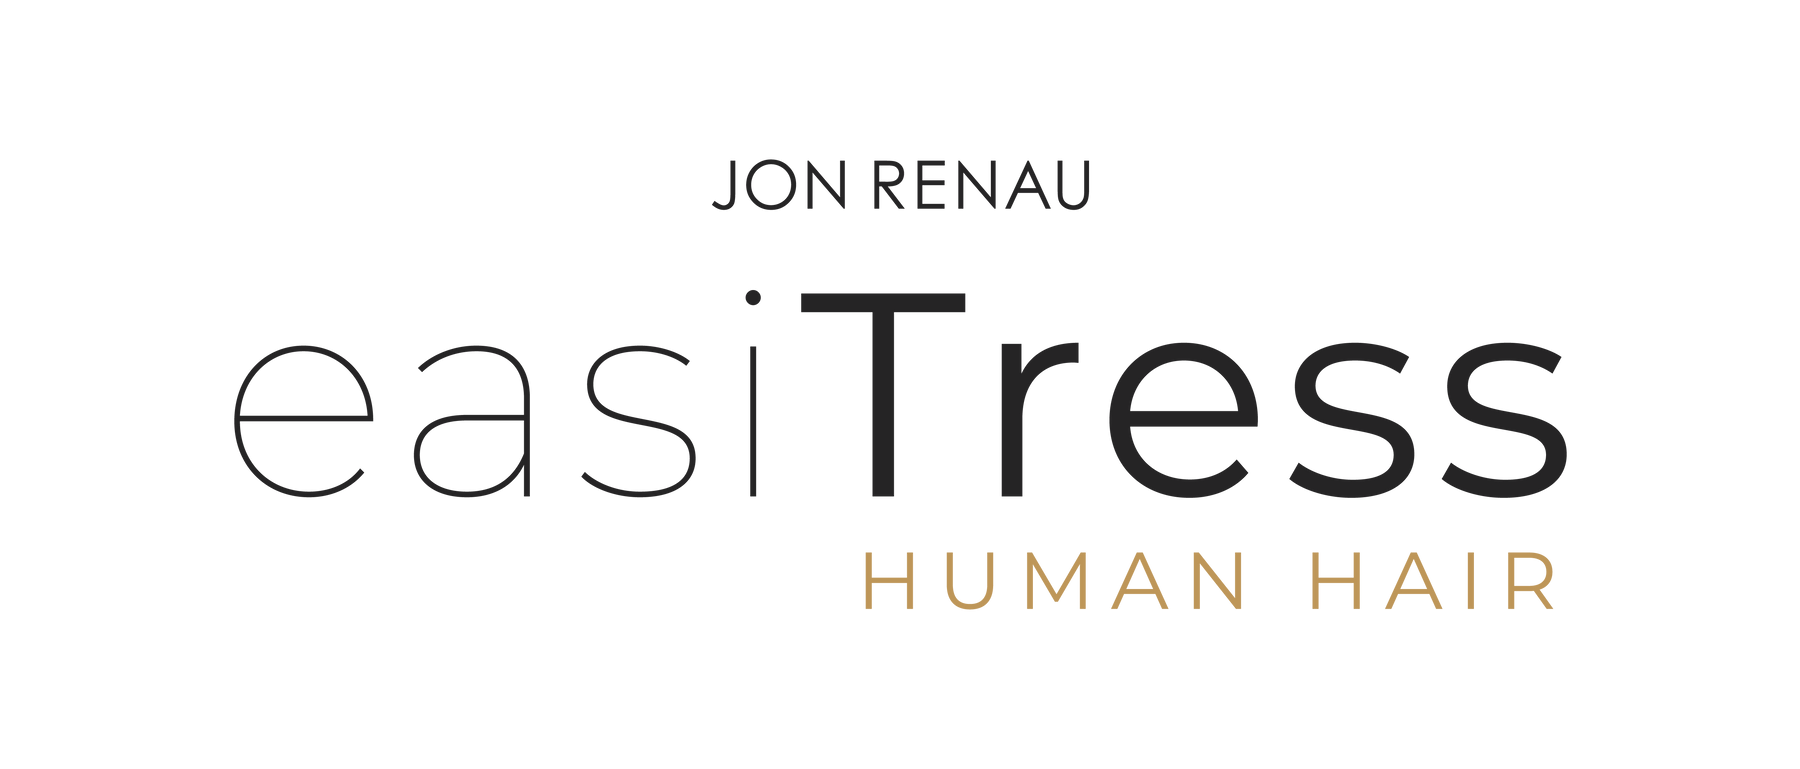 Jon Renau EasiTress Launch - NOVEMBER 2023 LAUNCH!